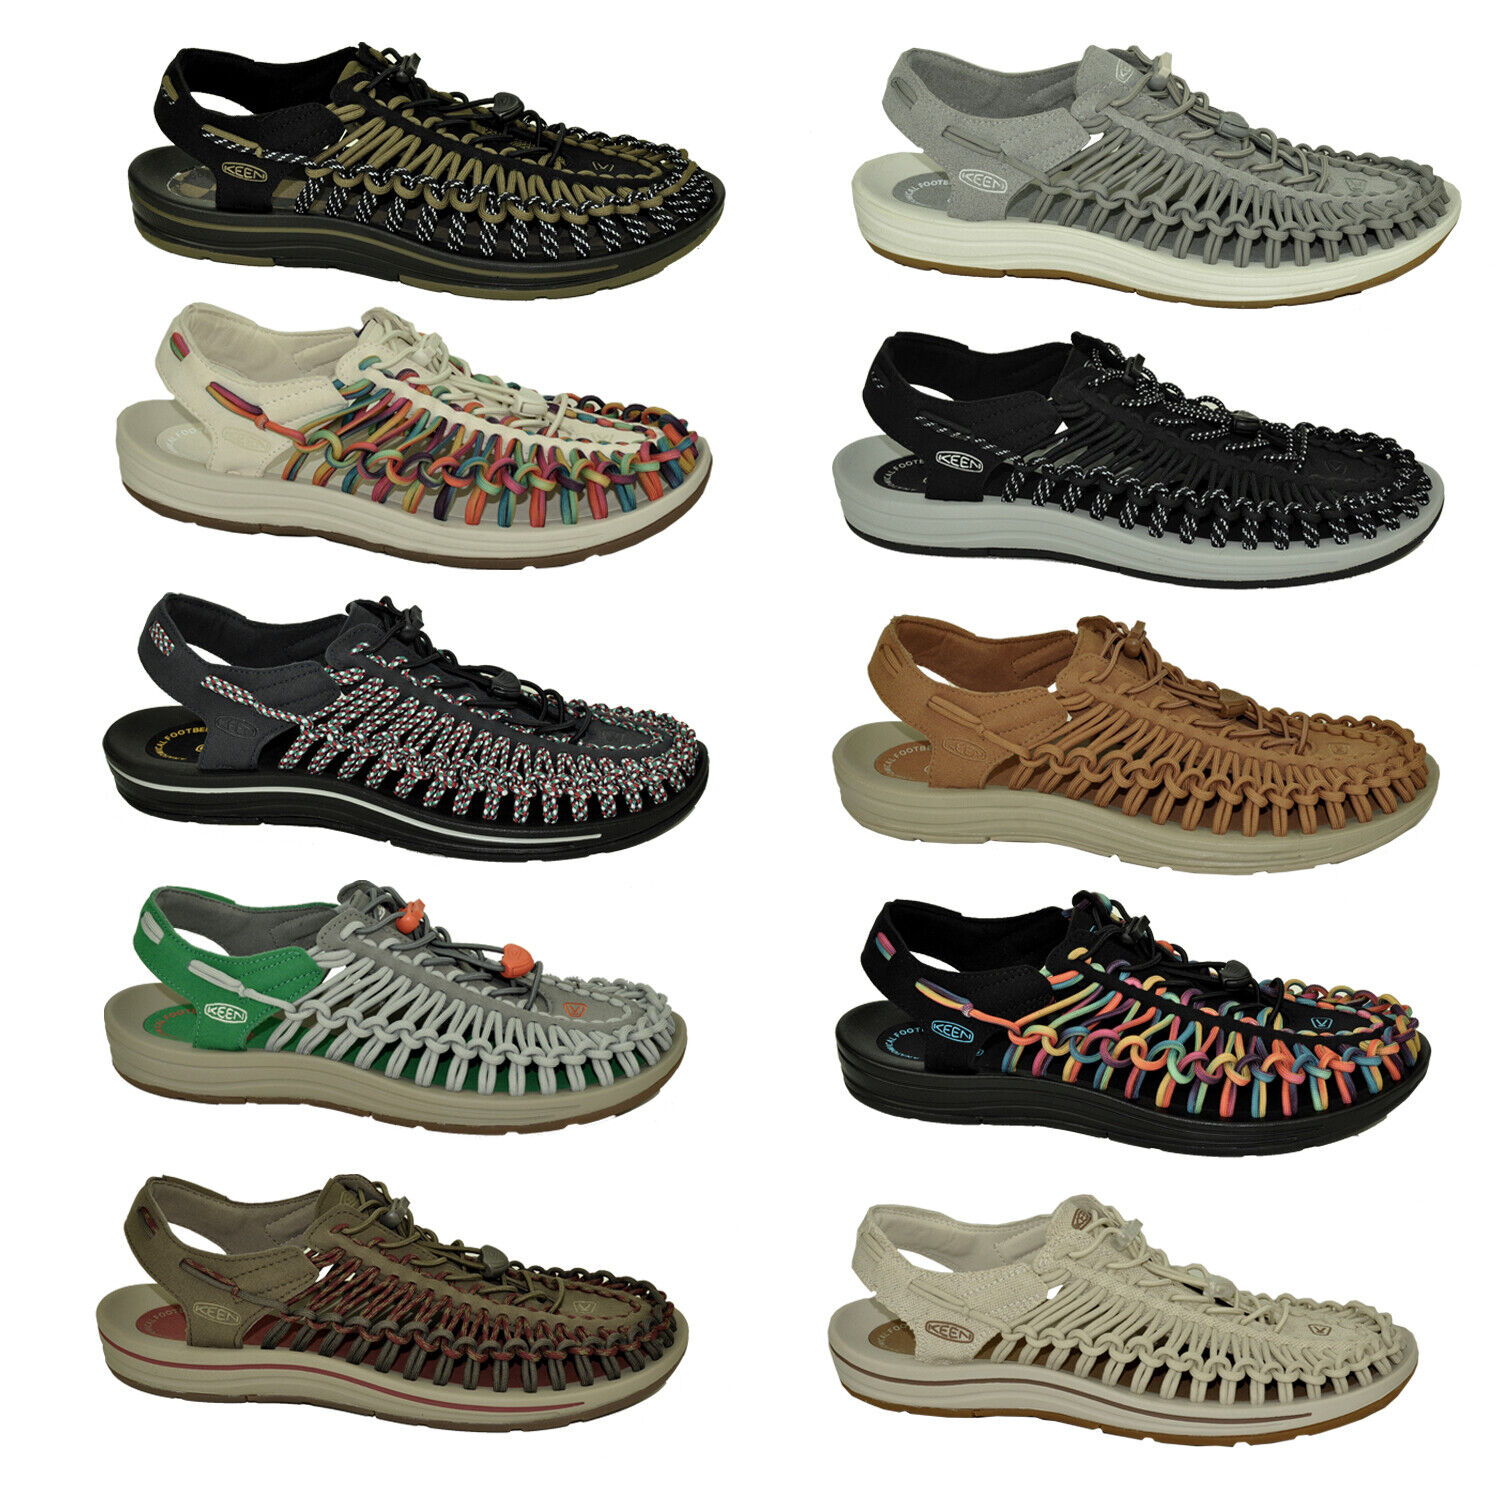 KEEN Uneek Sandalen Trekkingsandalen Ultra Leicht Leder Canvas Herren Sneaker Modell - Farbe 1023047 - Dunkelgrau/Bunt Schuhgröße EUR 44 - UK 9,5 - US 10,5